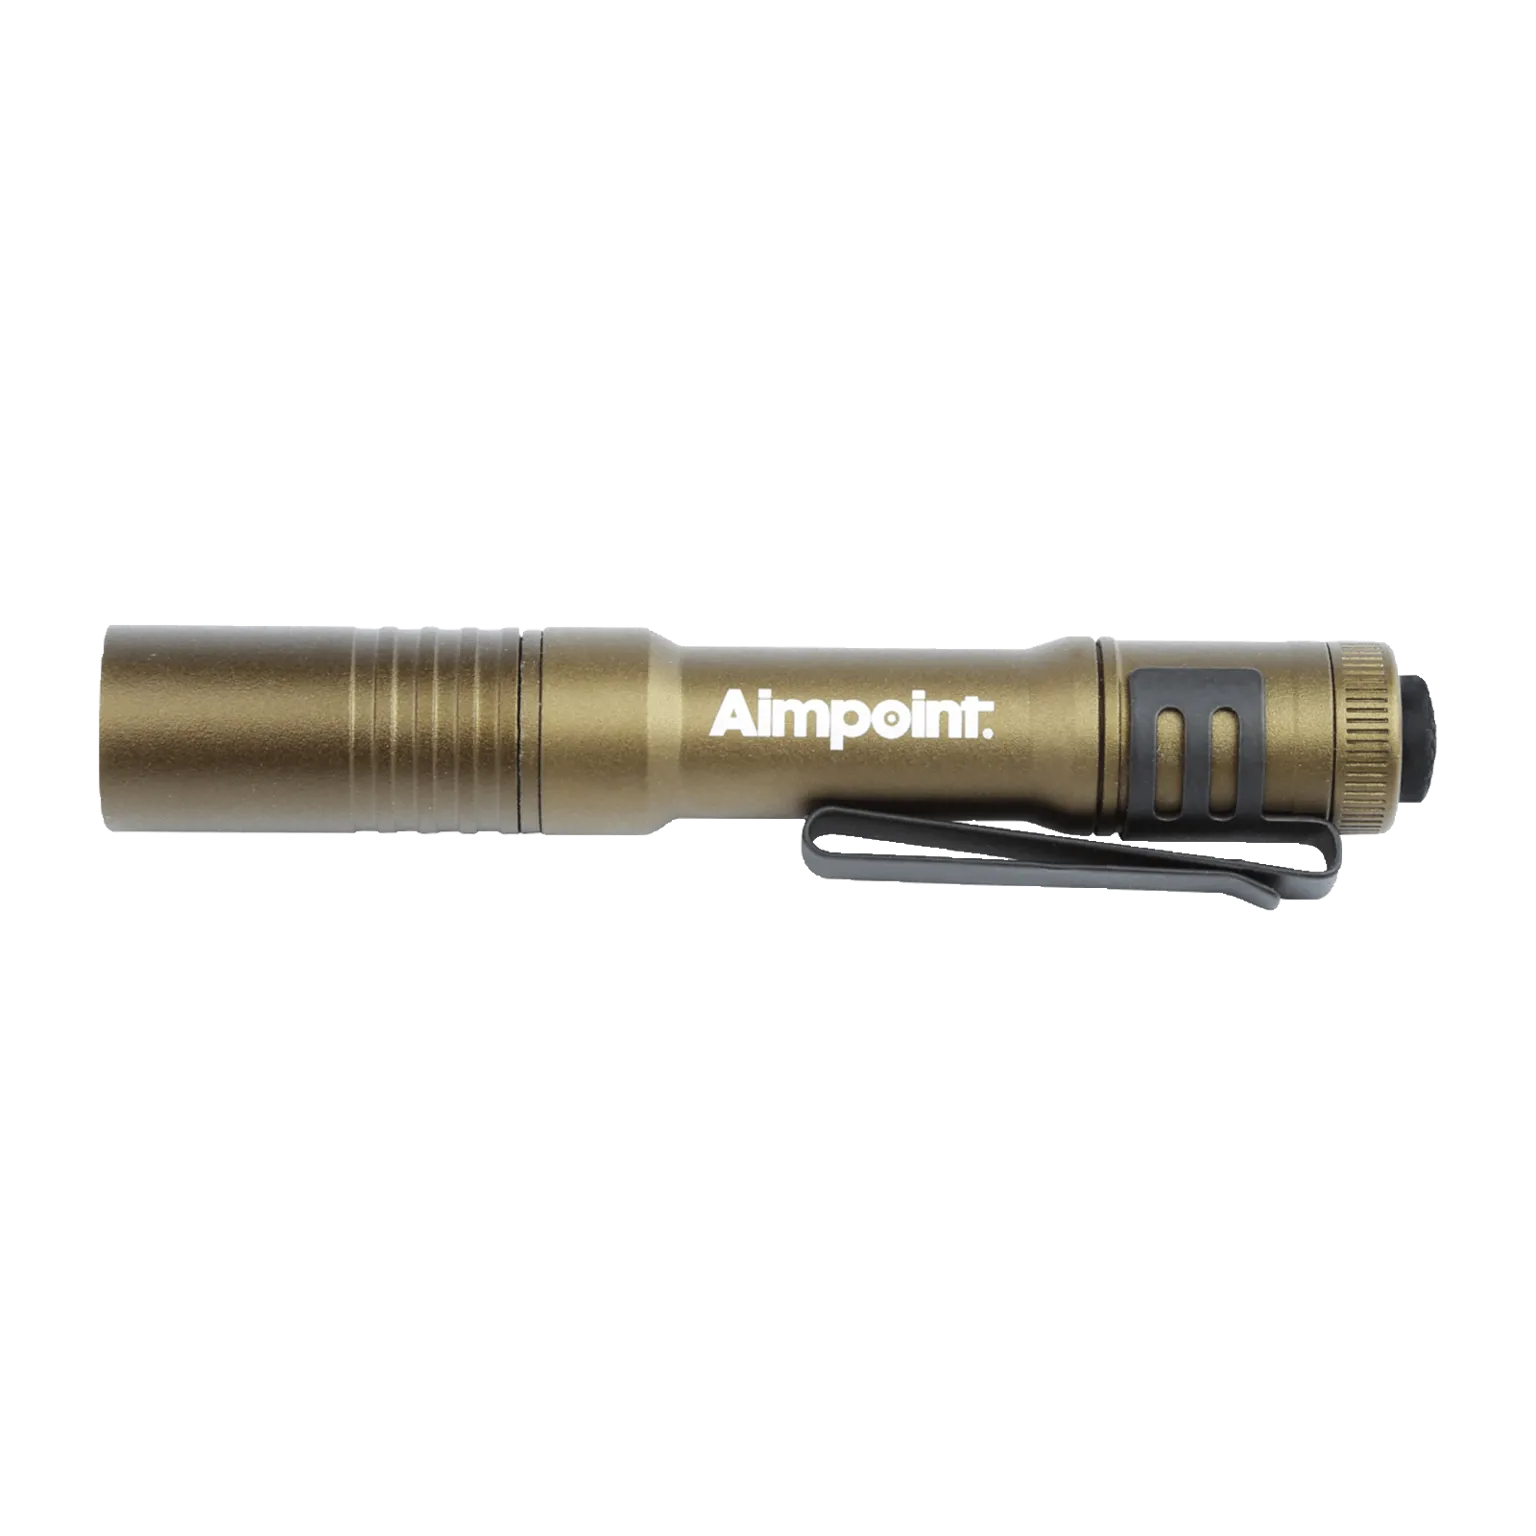 Ficklampa, Streamlight - Brun/beige med Aimpoint® logotyp  - 2